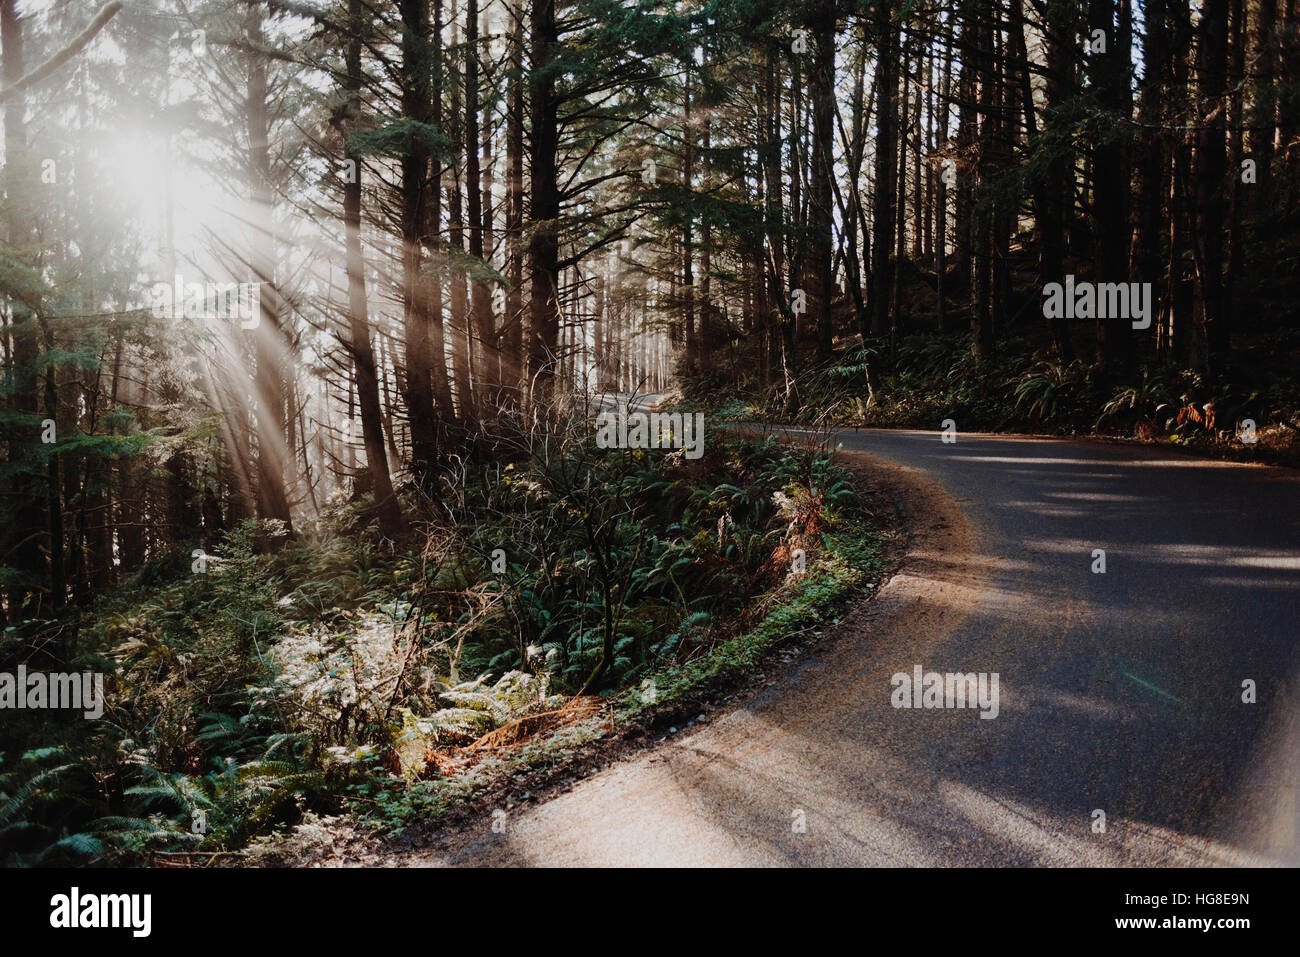 Emisores de luz solar a través de árboles en la carretera en el bosque Foto de stock